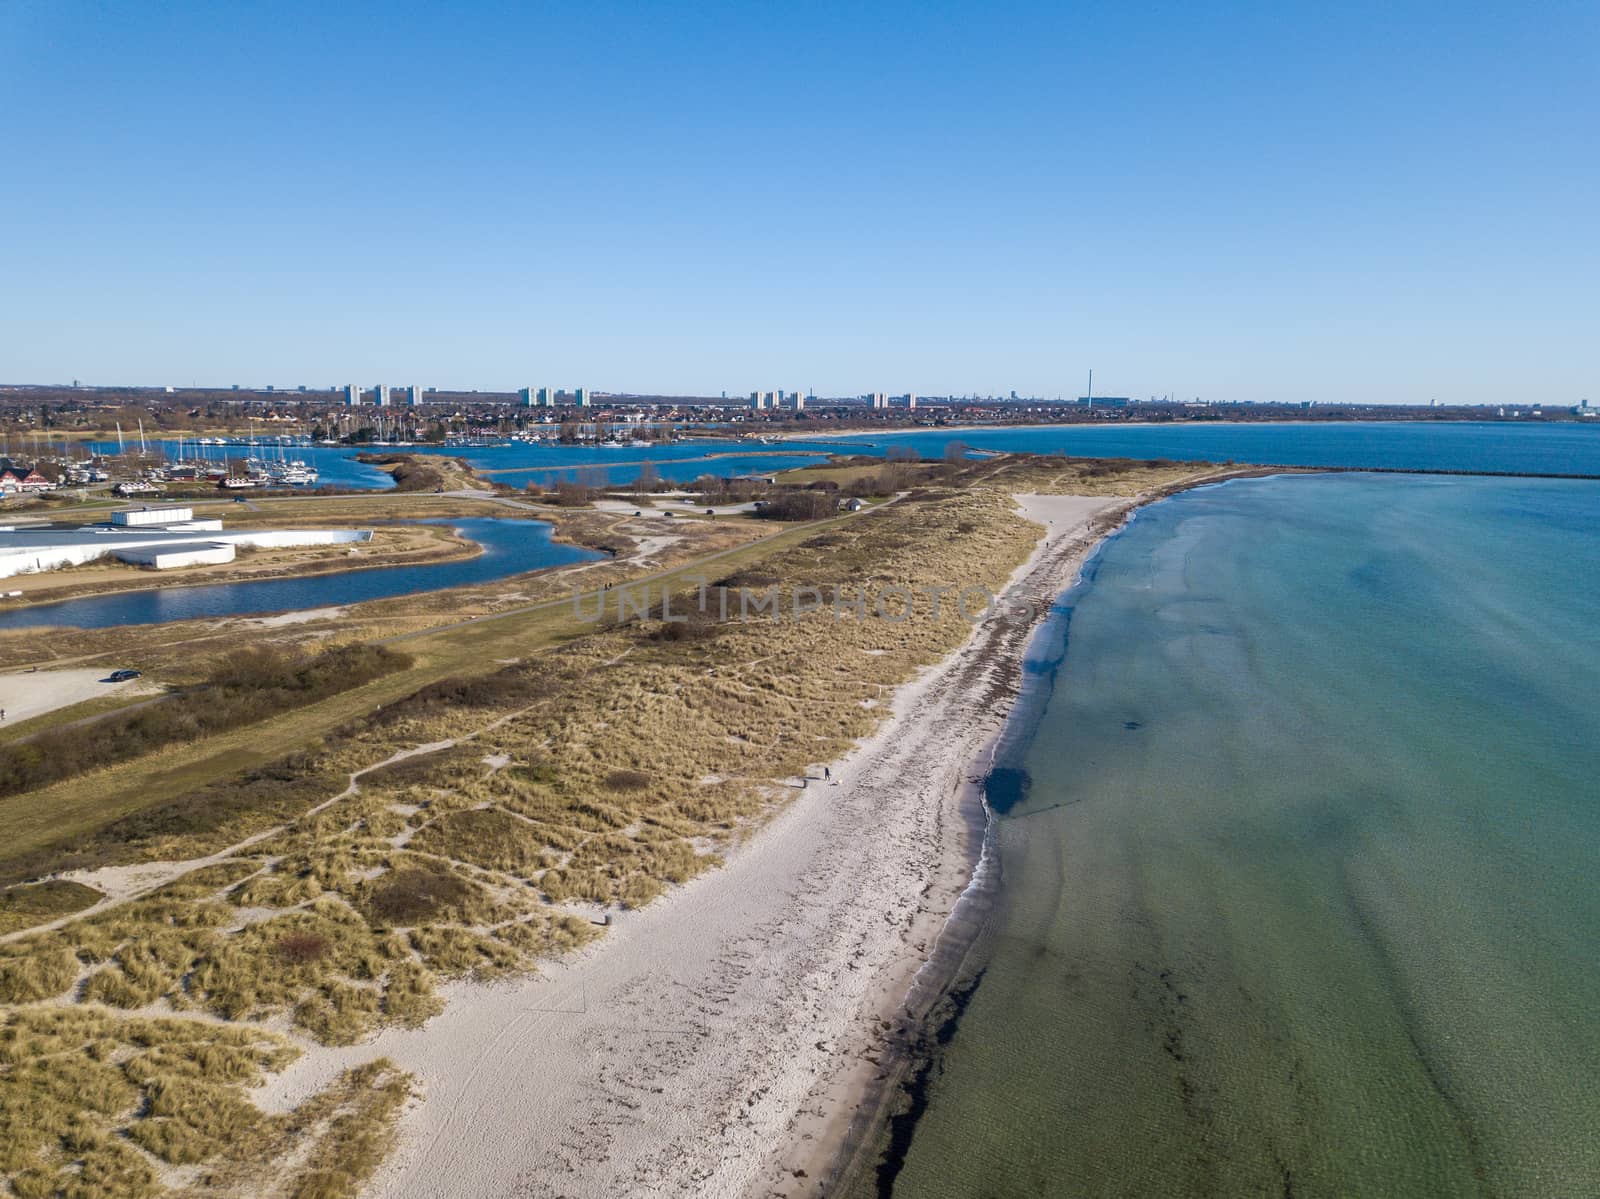 Ishoj, Denmark - March 21, 2020: Aerial drone view of the sand beach in Ishoj south of Copenhagen